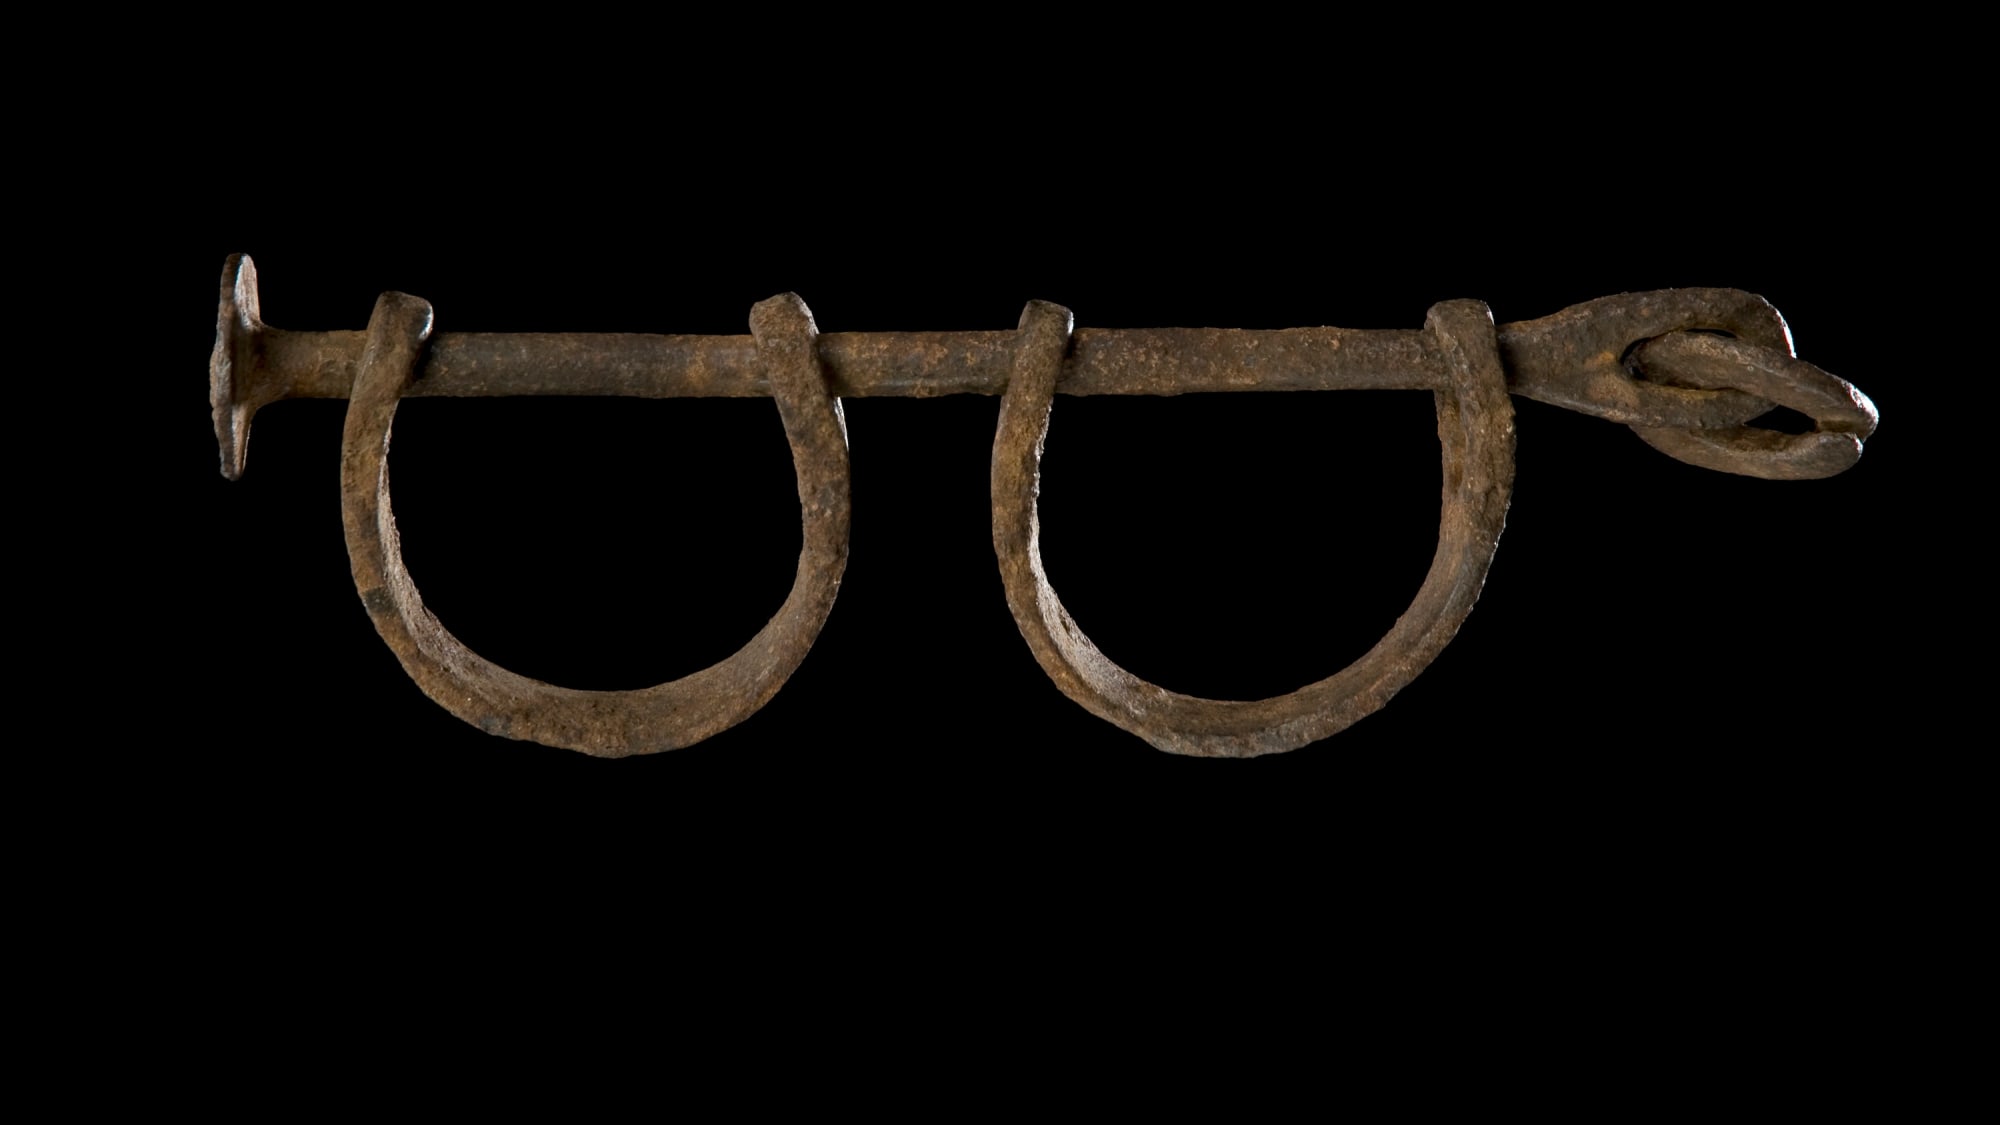 Iron Shackles used on enslaved people 